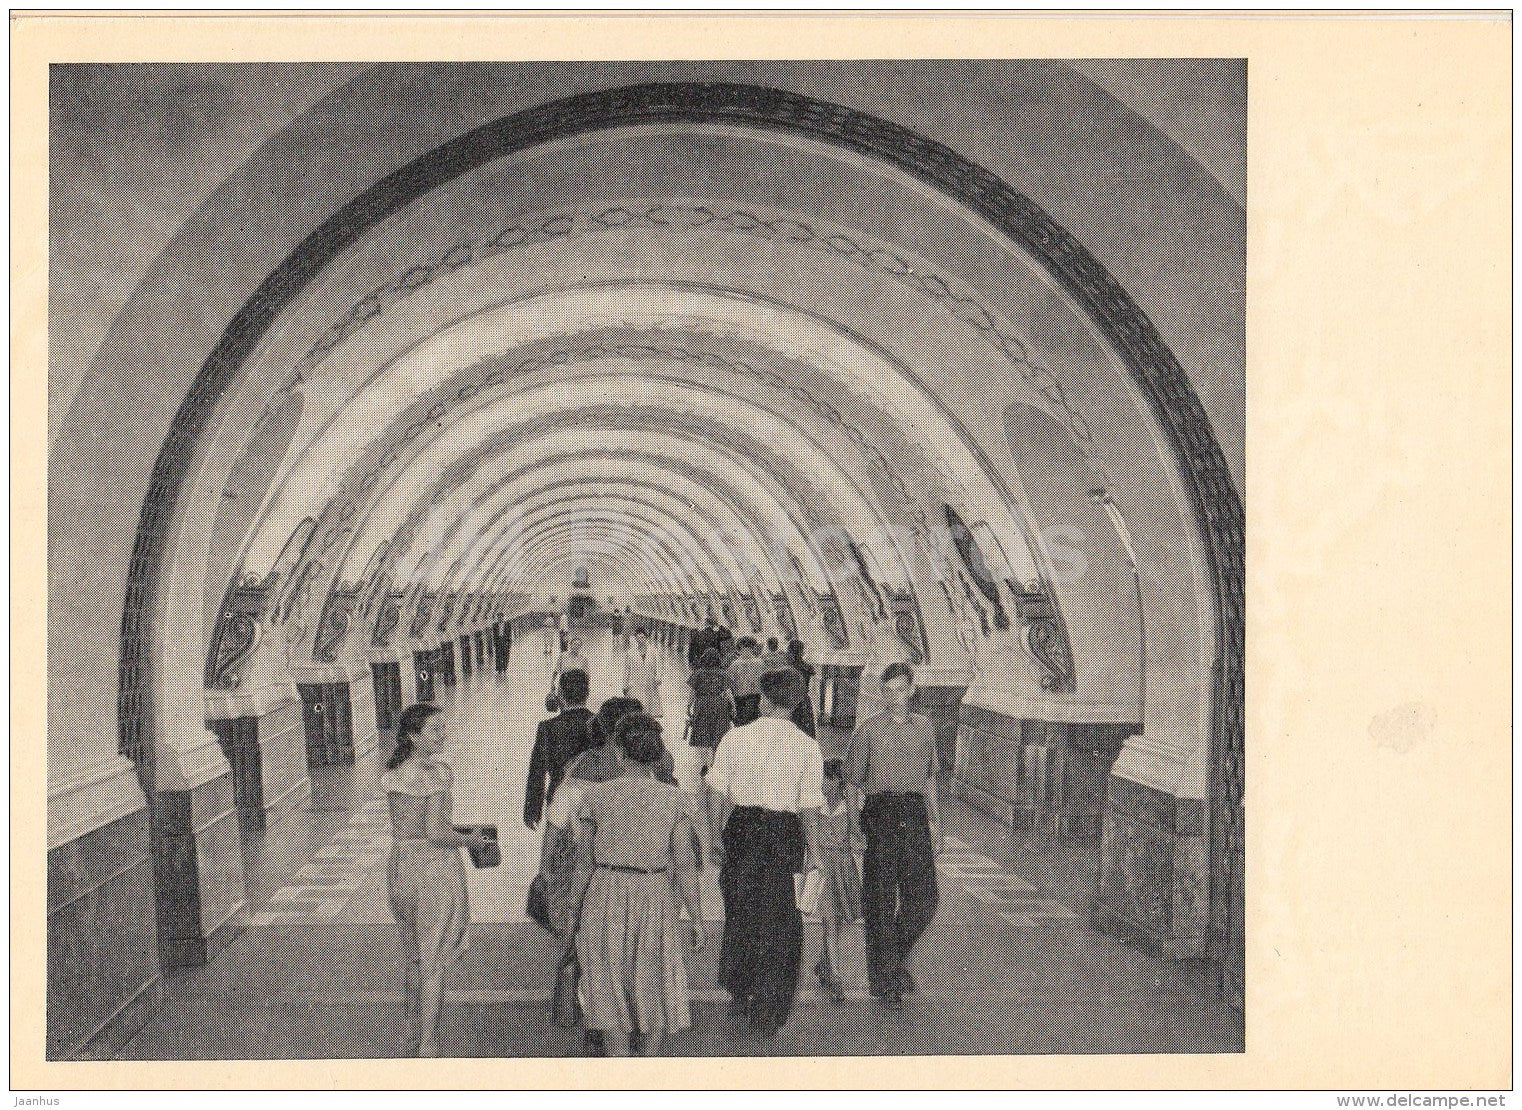 Uprising square station , Platfrom hall - Leningrad Metro - subway - St. Petersburg - 1960 - Russia USSR - unused - JH Postcards